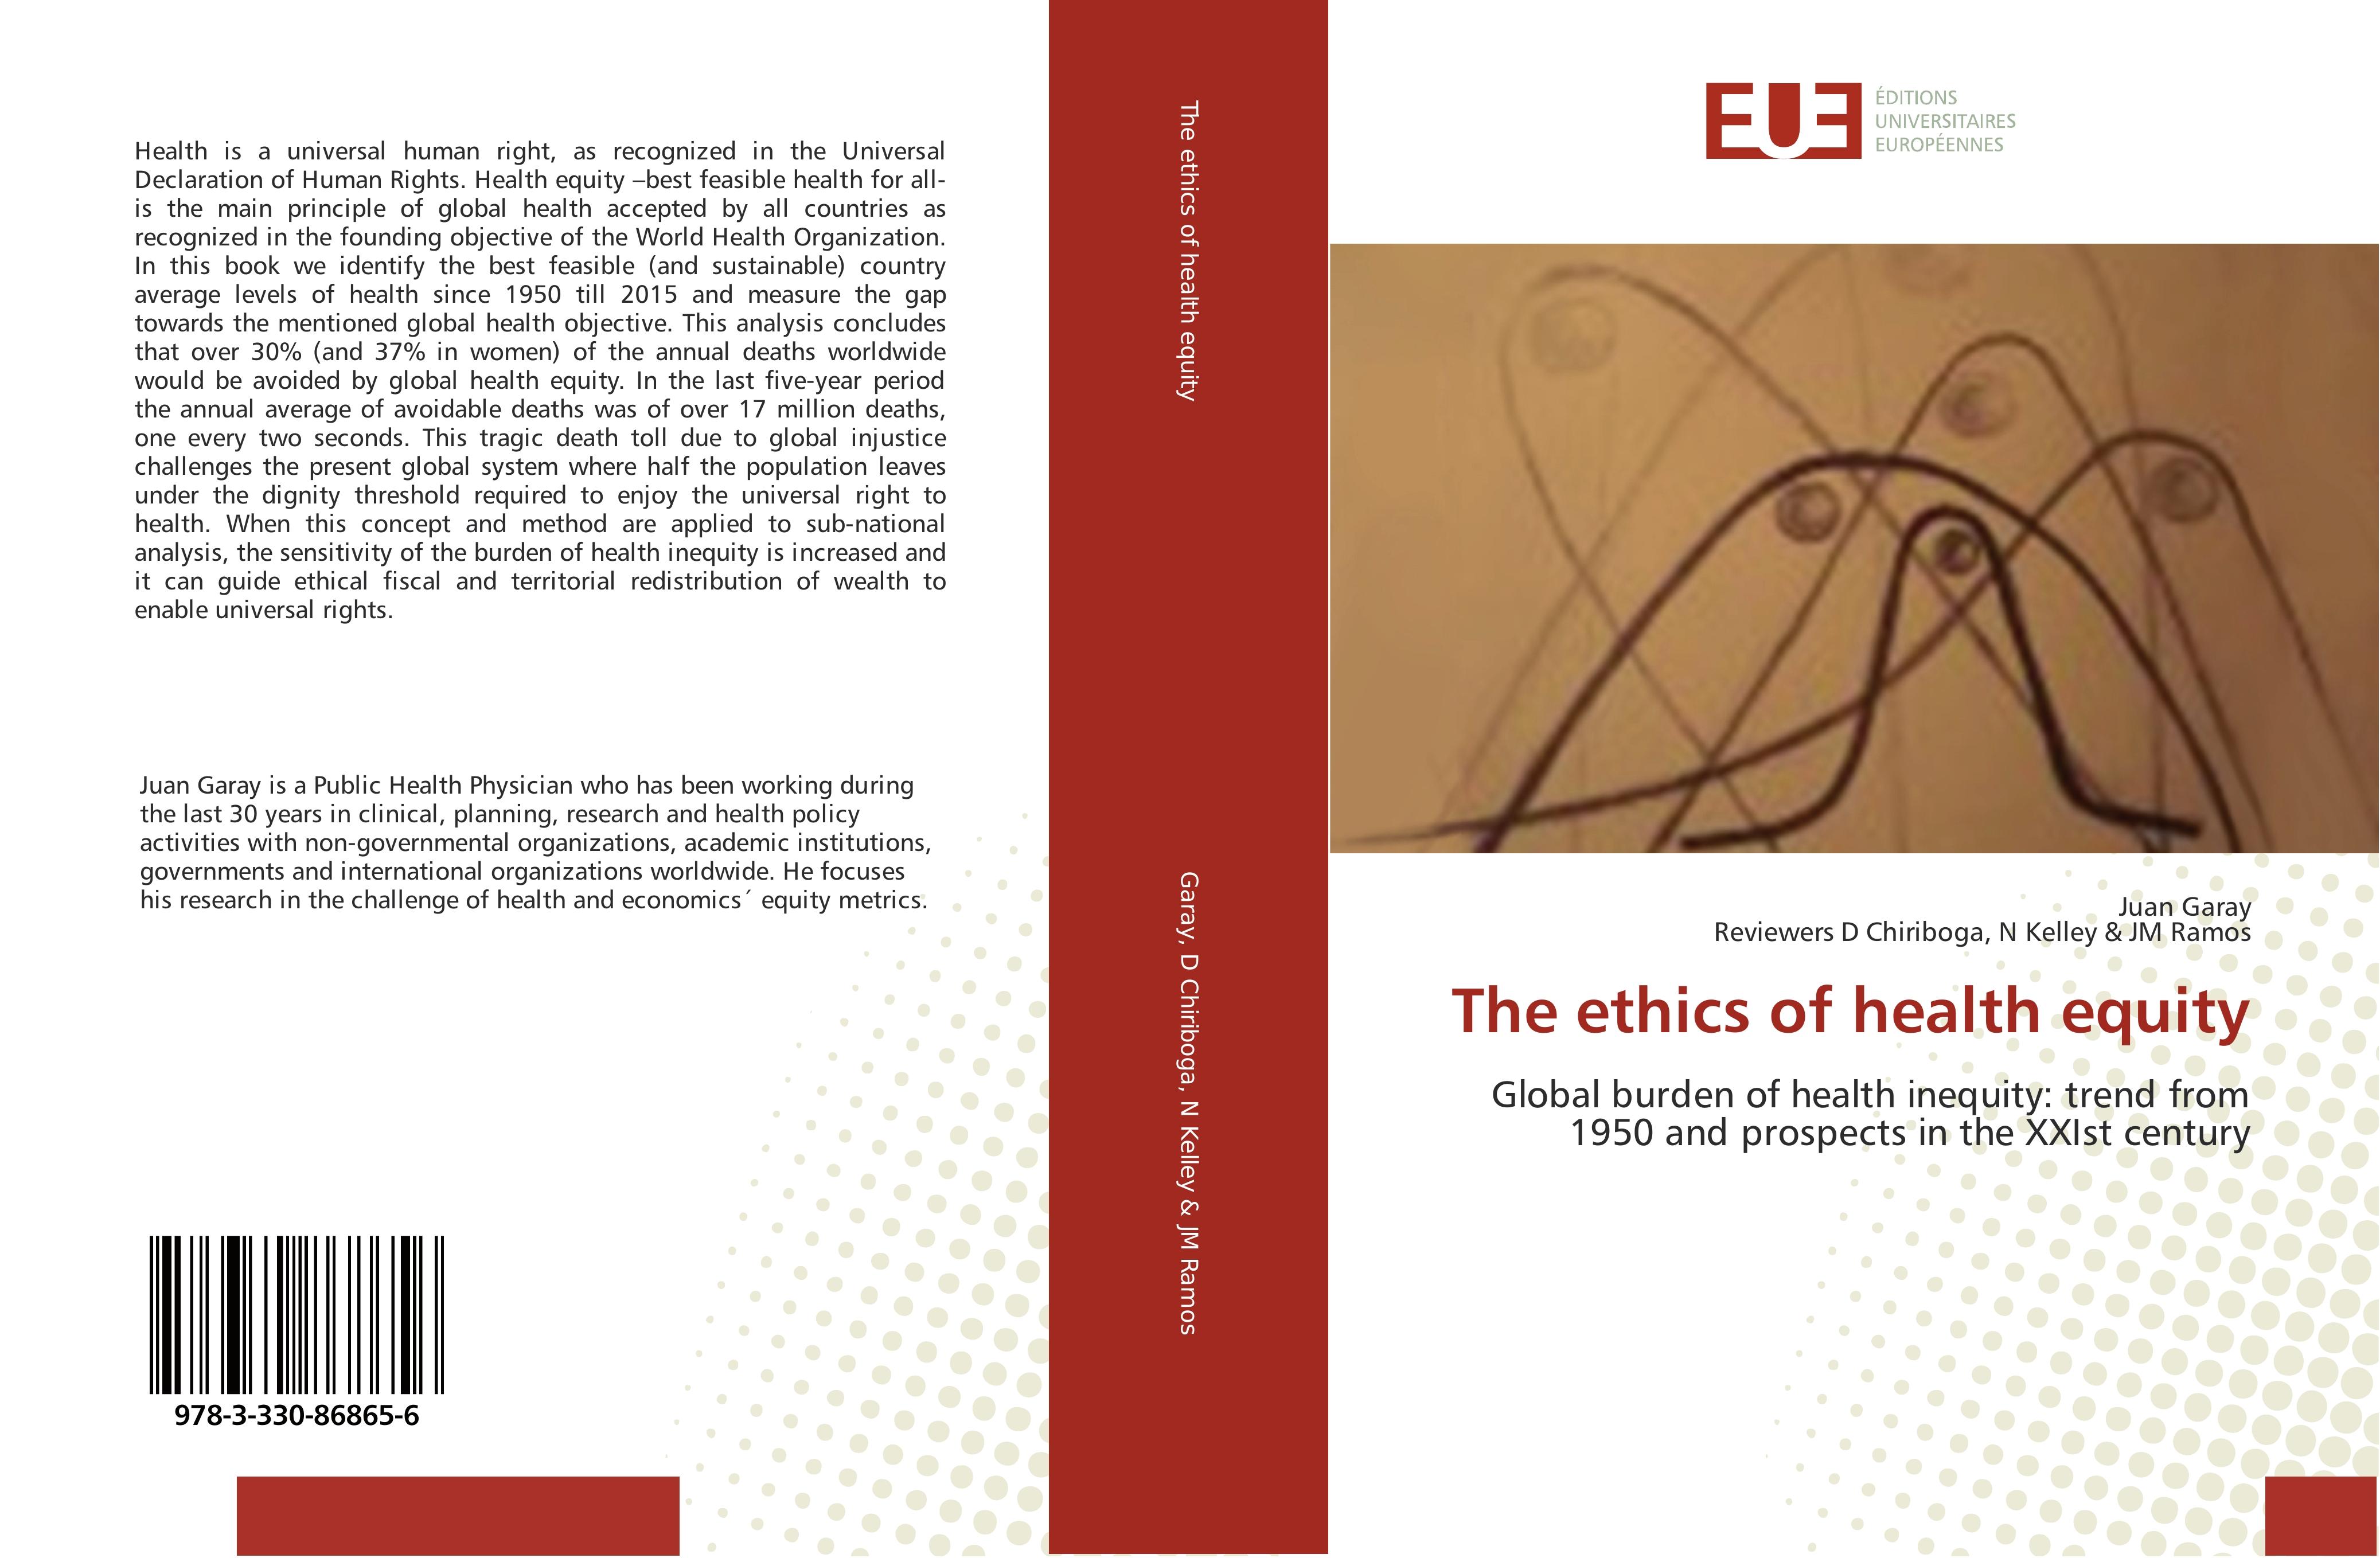 The ethics of health equity - Juan Garay Reviewers D Chiriboga, N Kelley & JM Ramos